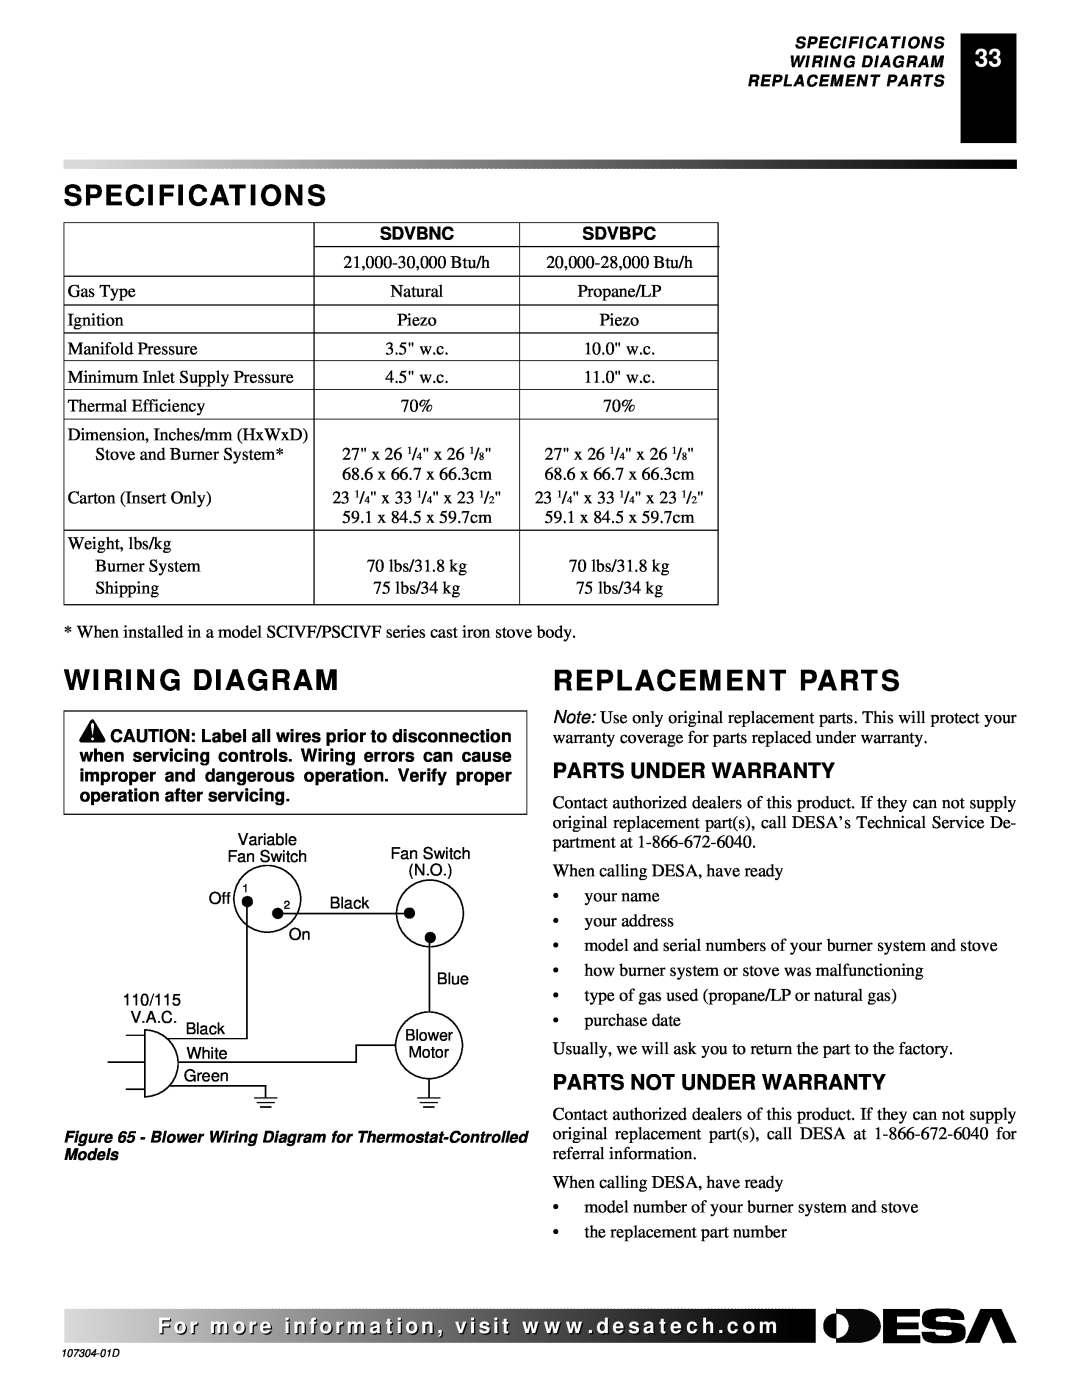 Desa SDVBNC, SDVBPC Specifications, Wiring Diagram, Replacement Parts, Parts Under Warranty, Parts Not Under Warranty 